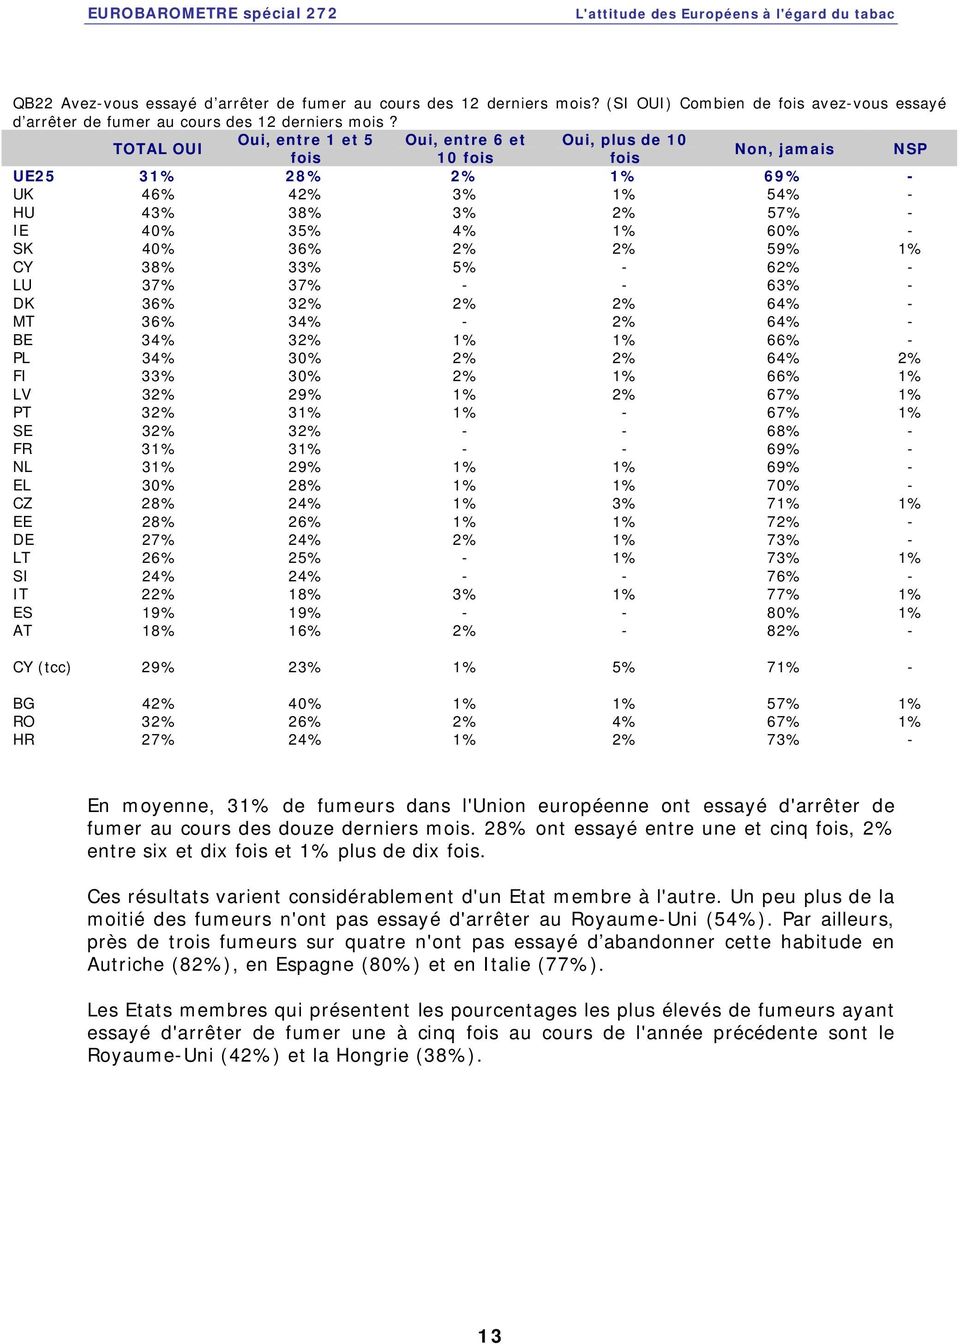 2% 2% 59% 1% CY 38% 33% 5% - 62% - LU 37% 37% - - 63% - DK 36% 32% 2% 2% 64% - MT 36% 34% - 2% 64% - BE 34% 32% 1% 1% 66% - PL 34% 30% 2% 2% 64% 2% FI 33% 30% 2% 1% 66% 1% LV 32% 29% 1% 2% 67% 1% PT